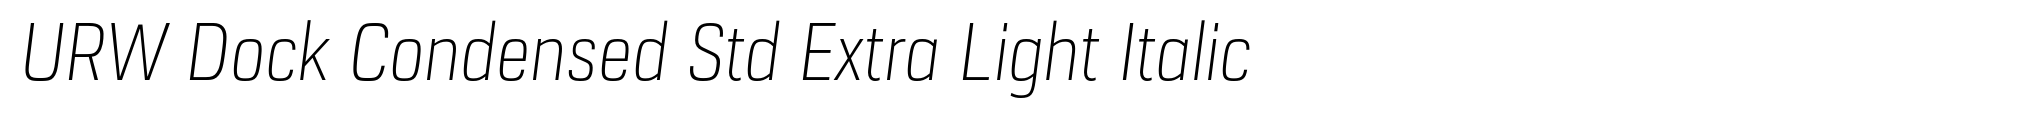 URW Dock Condensed Std Extra Light Italic image